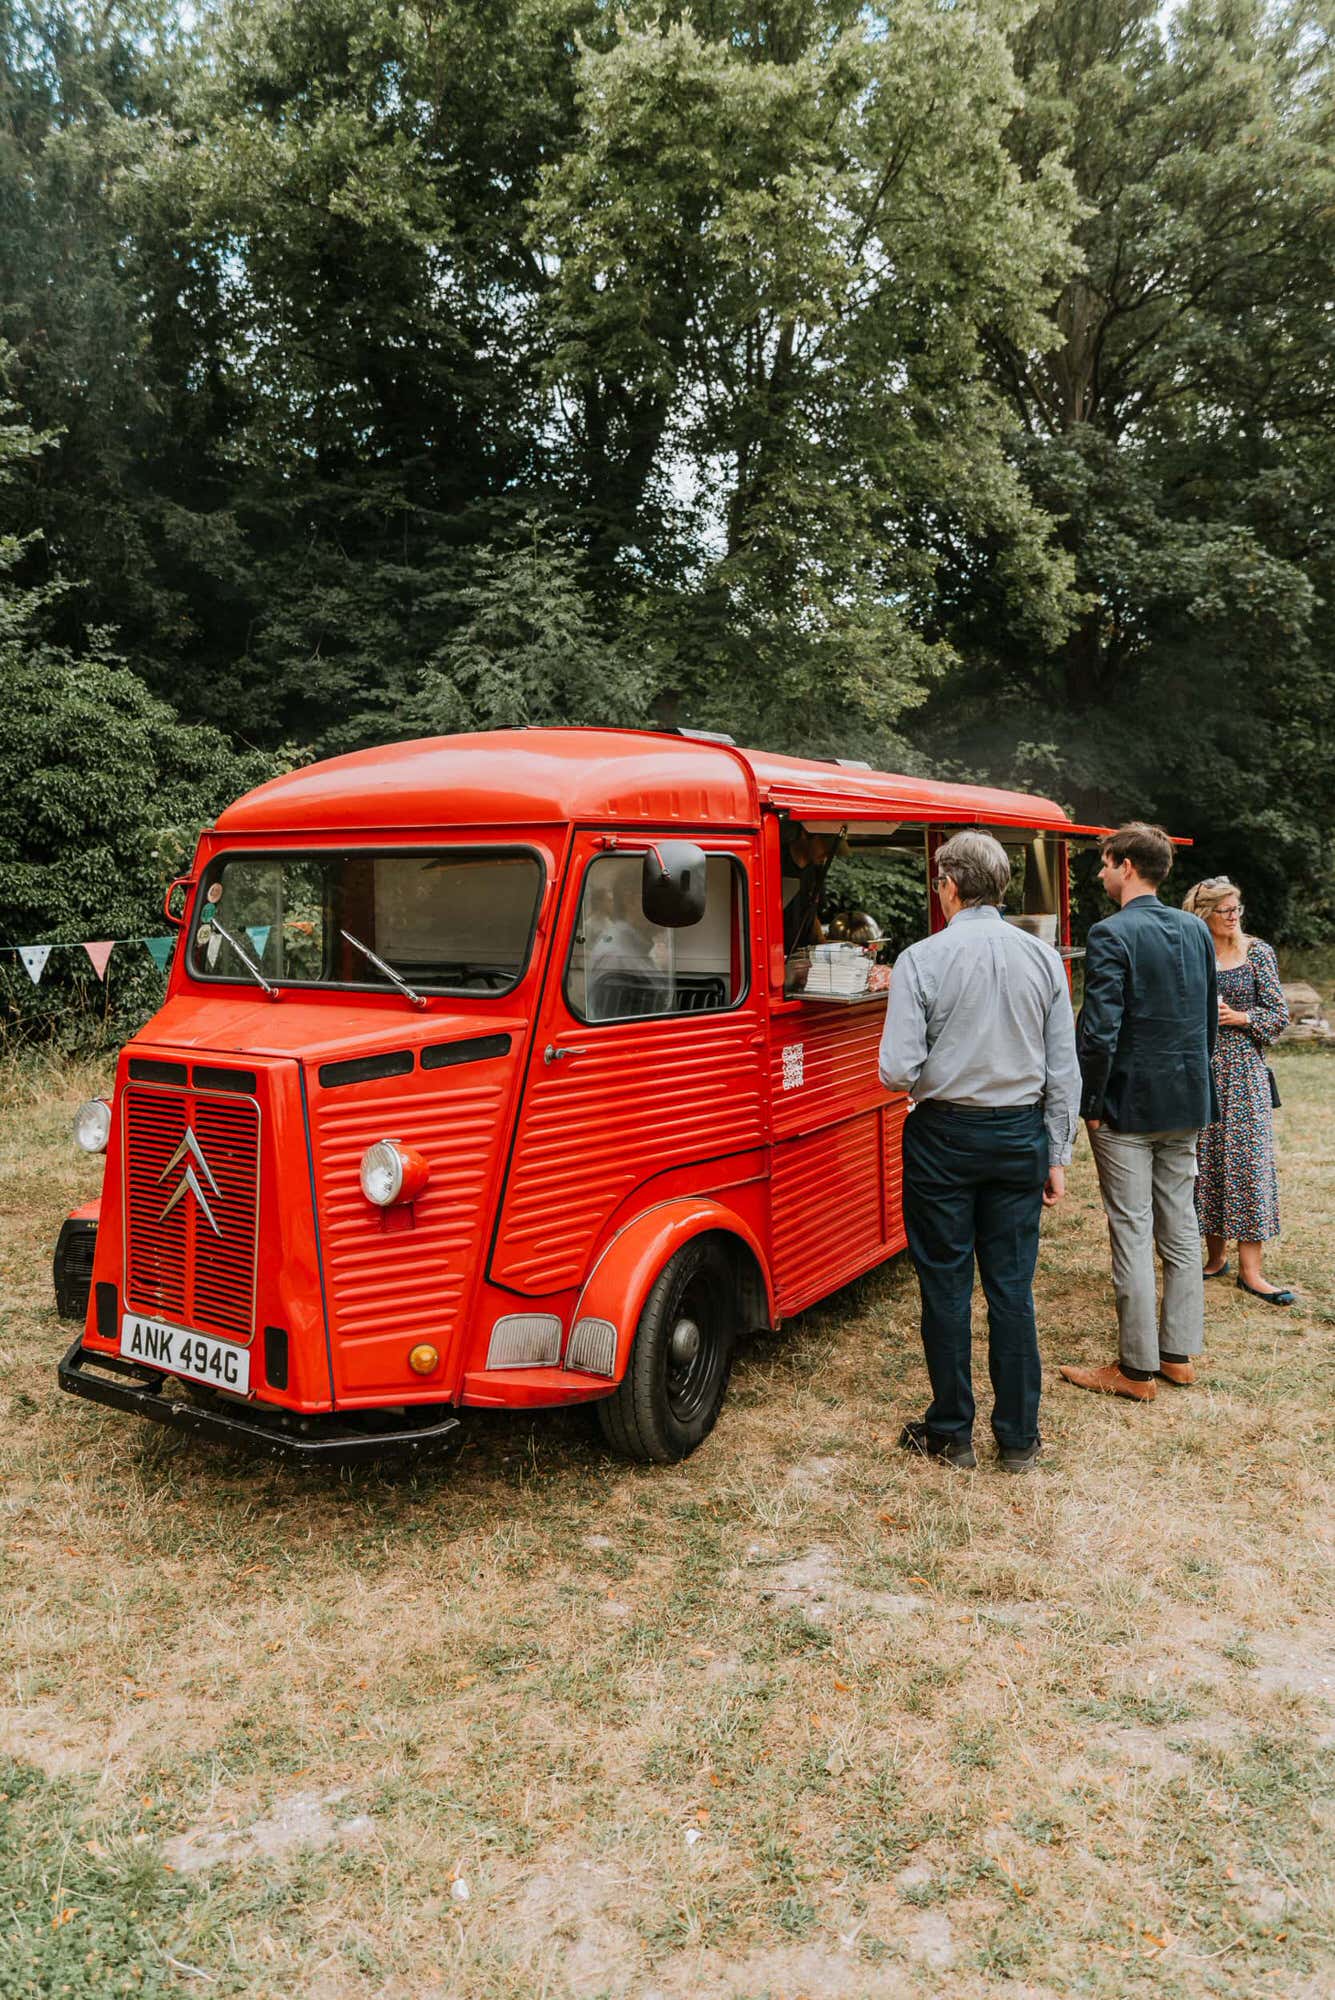 Red burger van at the wedding reception field